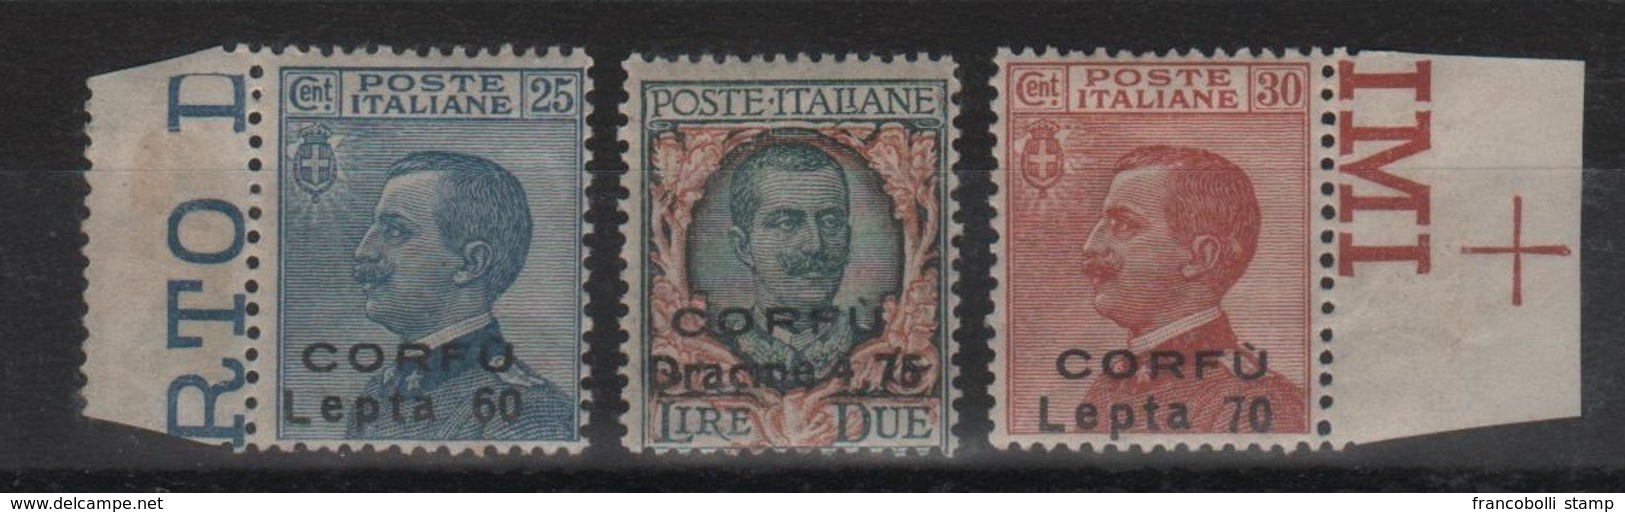 1923 Occupazione Corfù Francobolli D'Italia Sopr. CORFU Serie Cpl MNH Non Emessi - Korfu